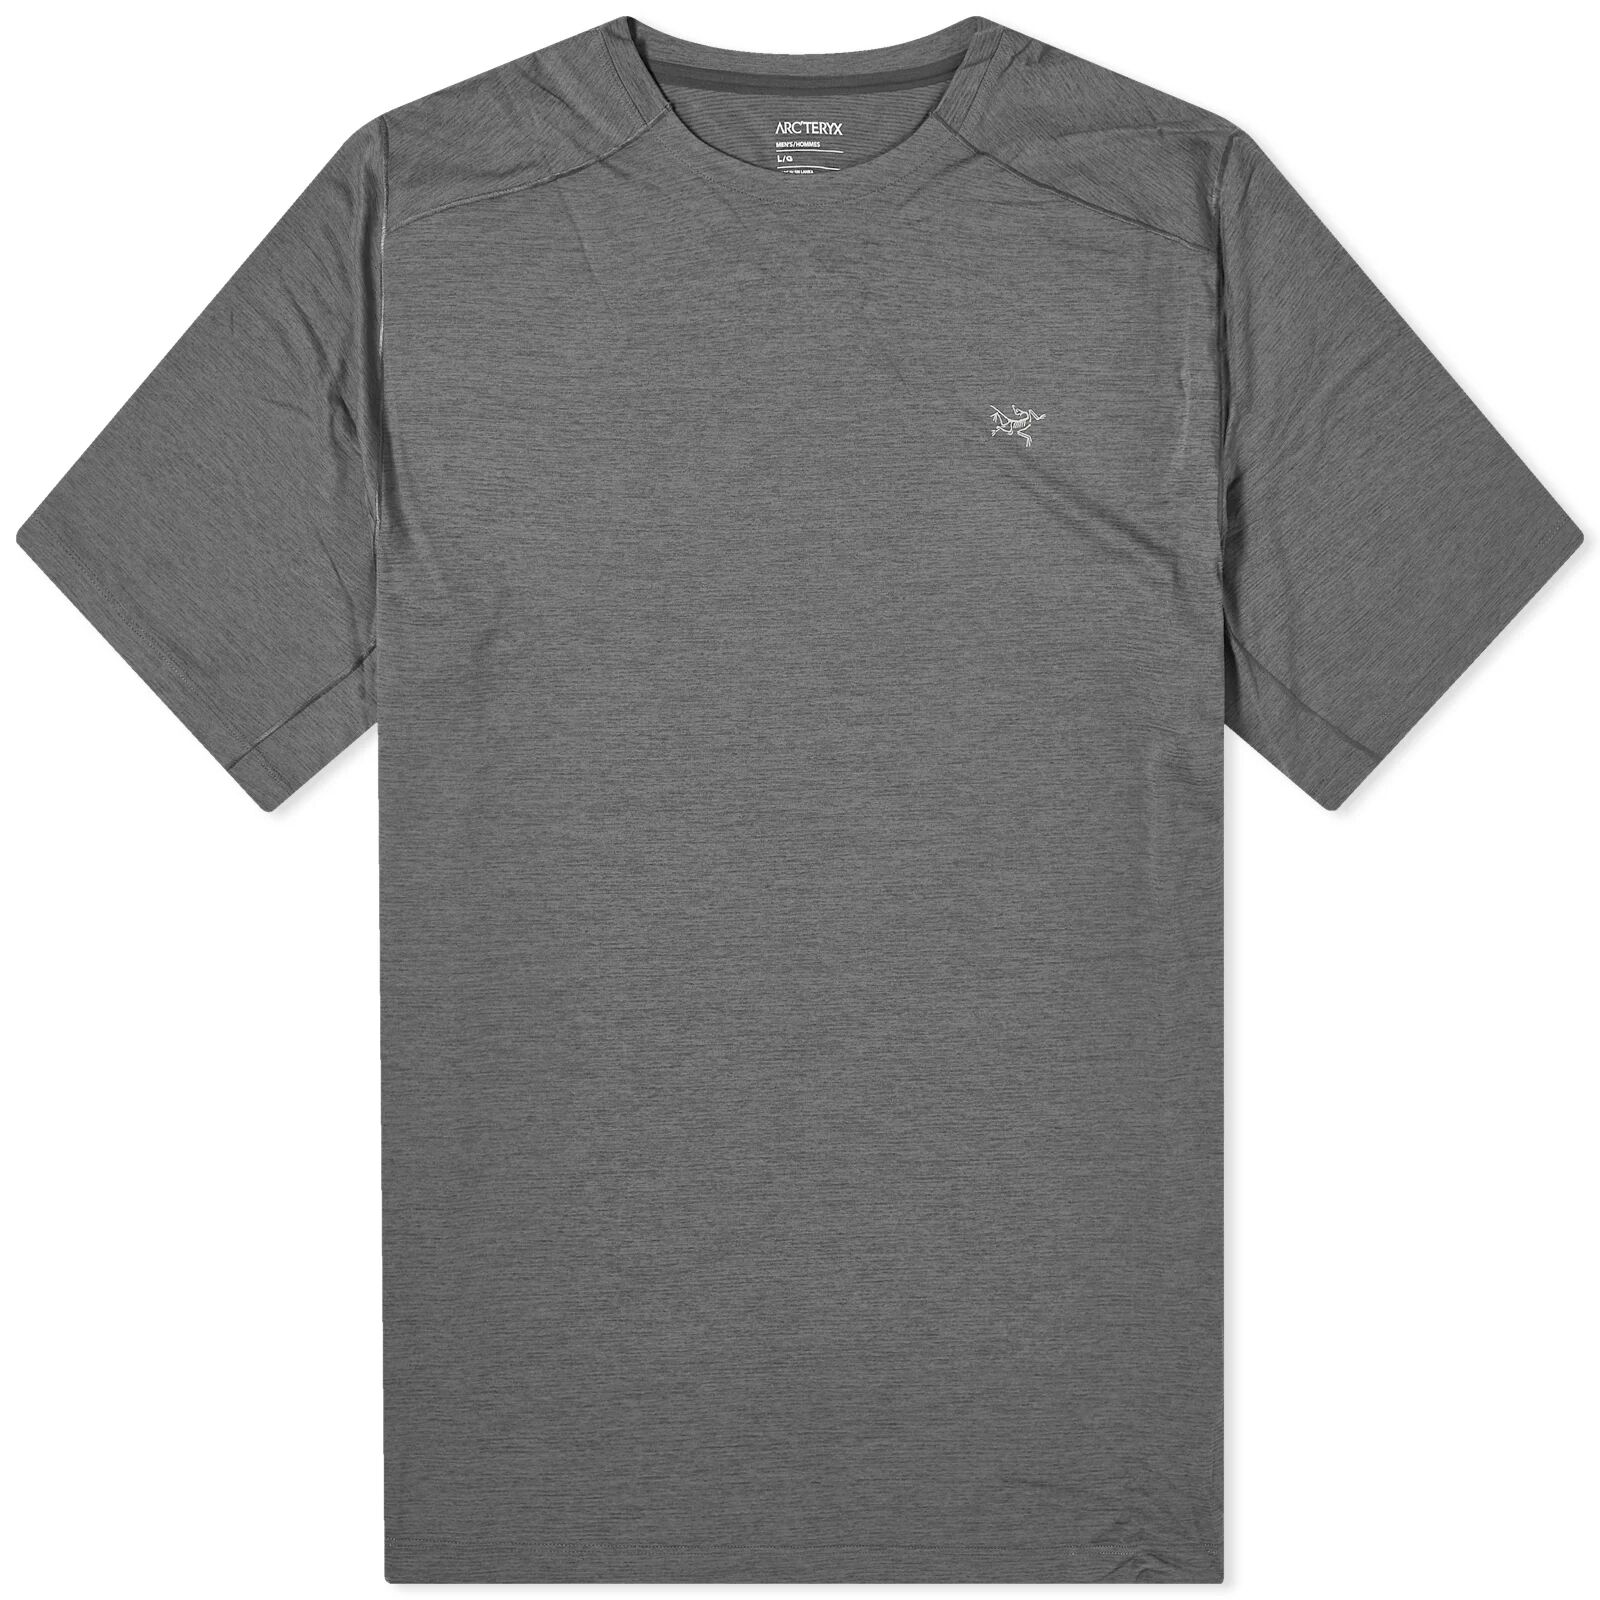 Arc'teryx Men's Cormac Crew T-Shirt in Black Heather, Size X-Small